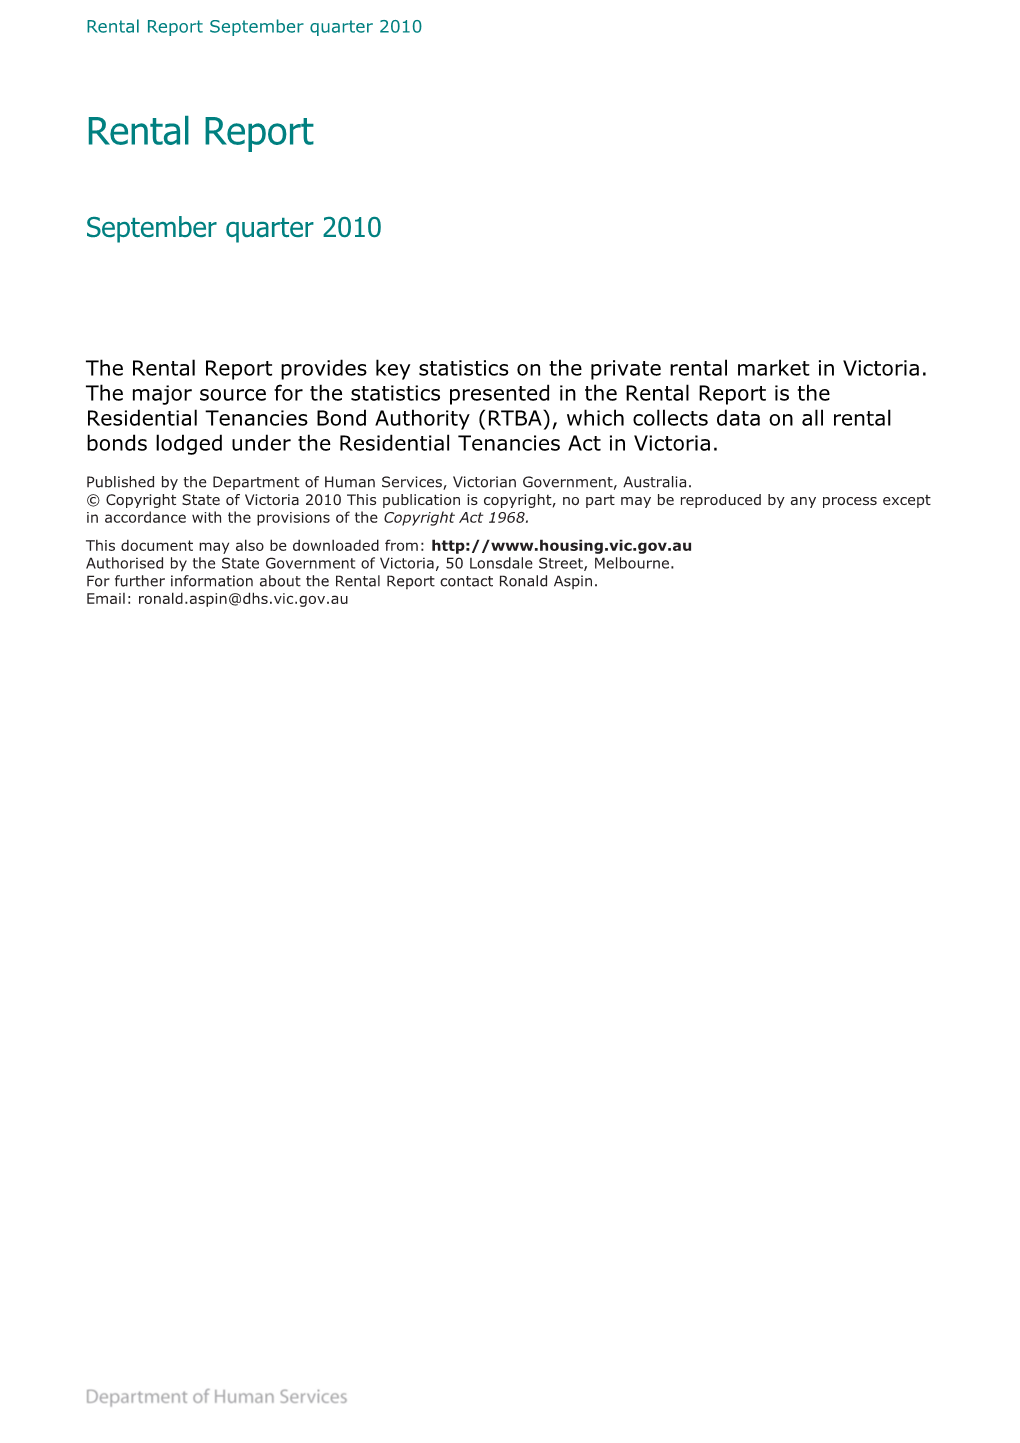 Rental Report September Quarter 2010 (Word Size 1.63 MB, Pages 28)